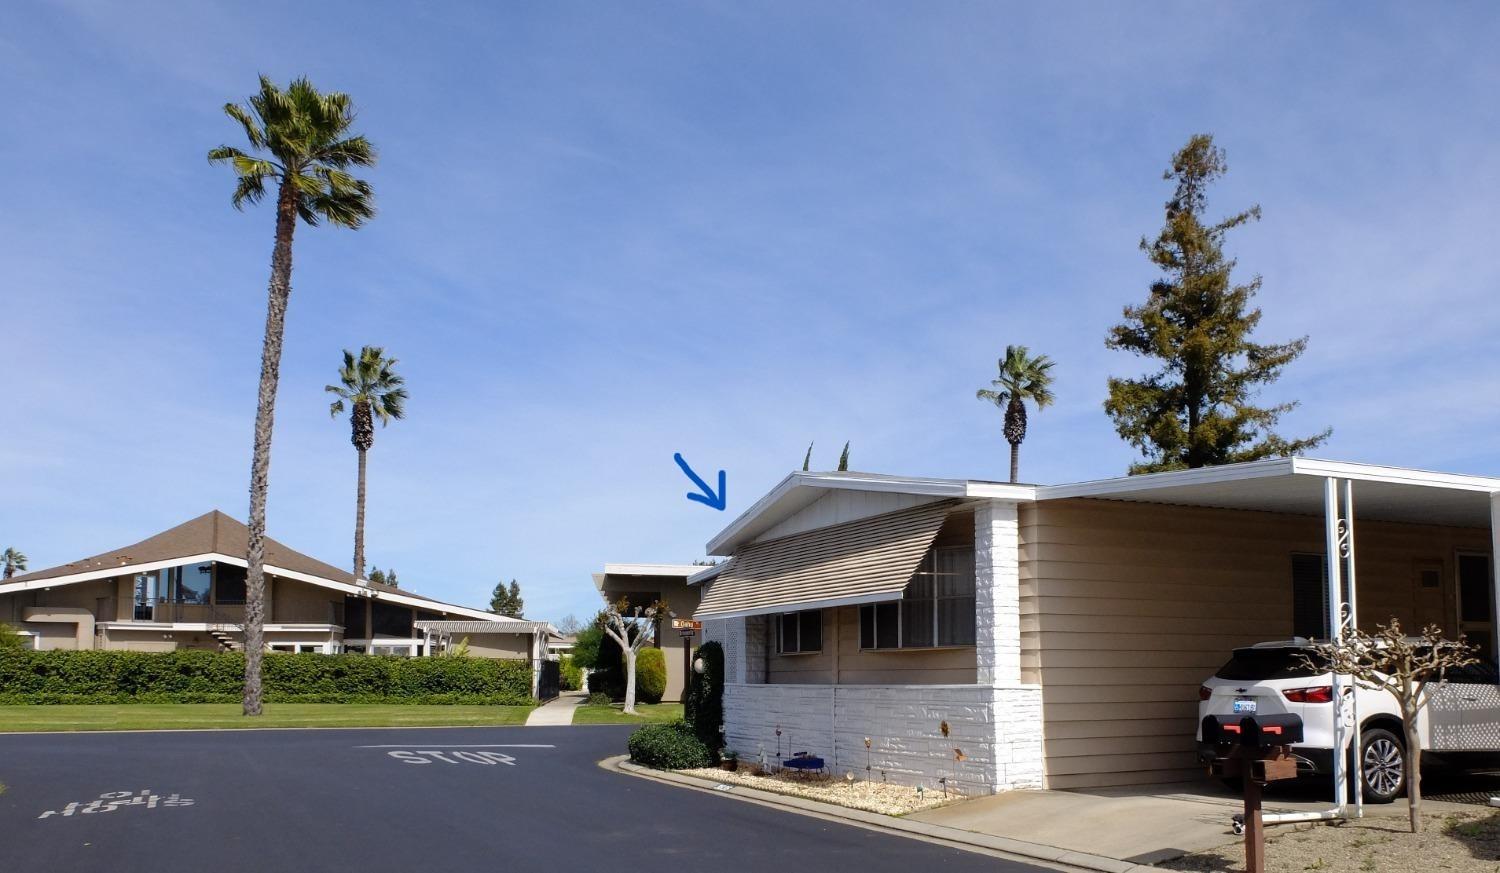 Photo of 3836 Homewood Village Dr in Modesto, CA